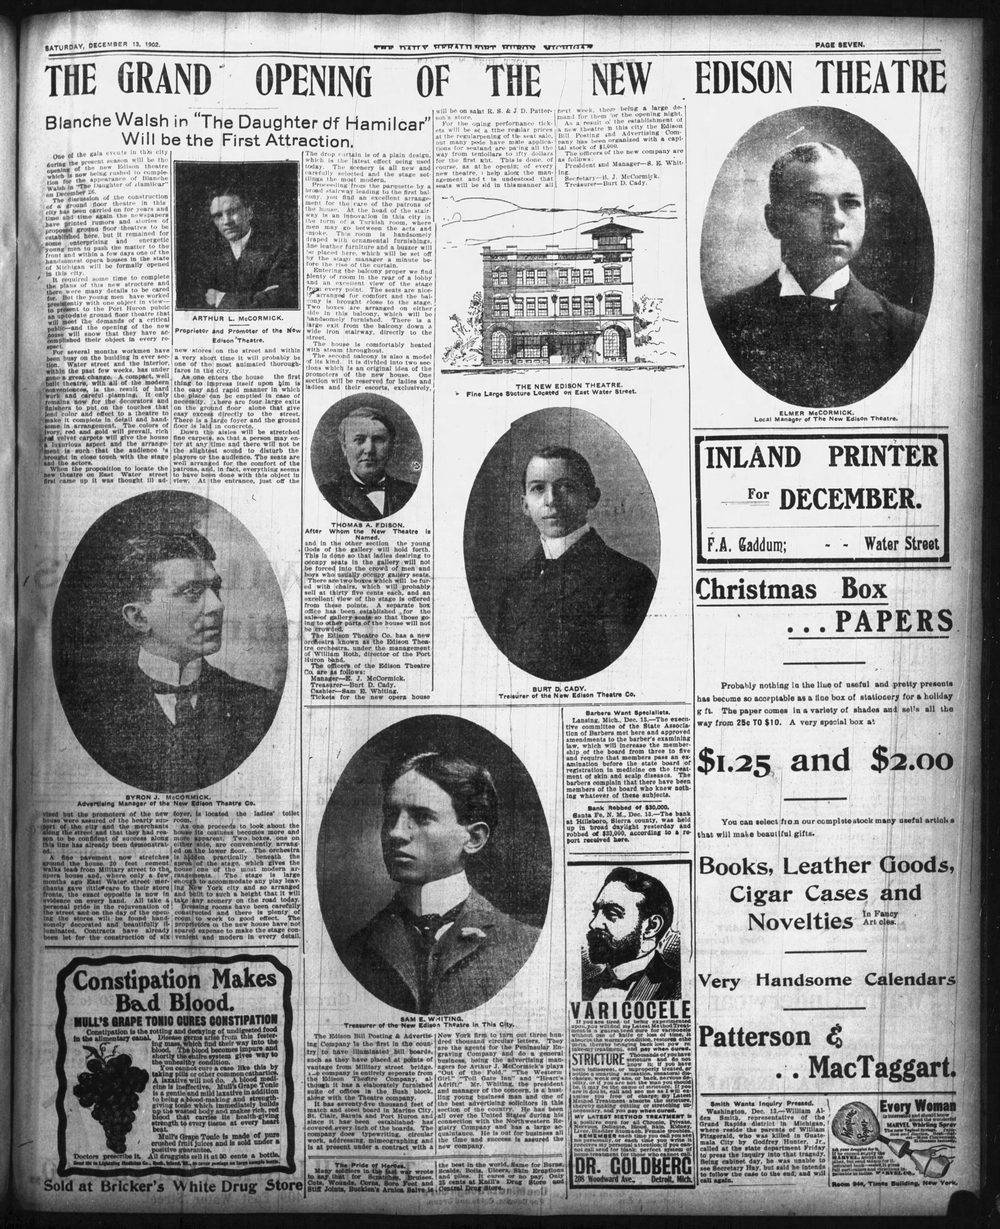 Edison Theatre - 1902 GRAND OPENING ARTICLE